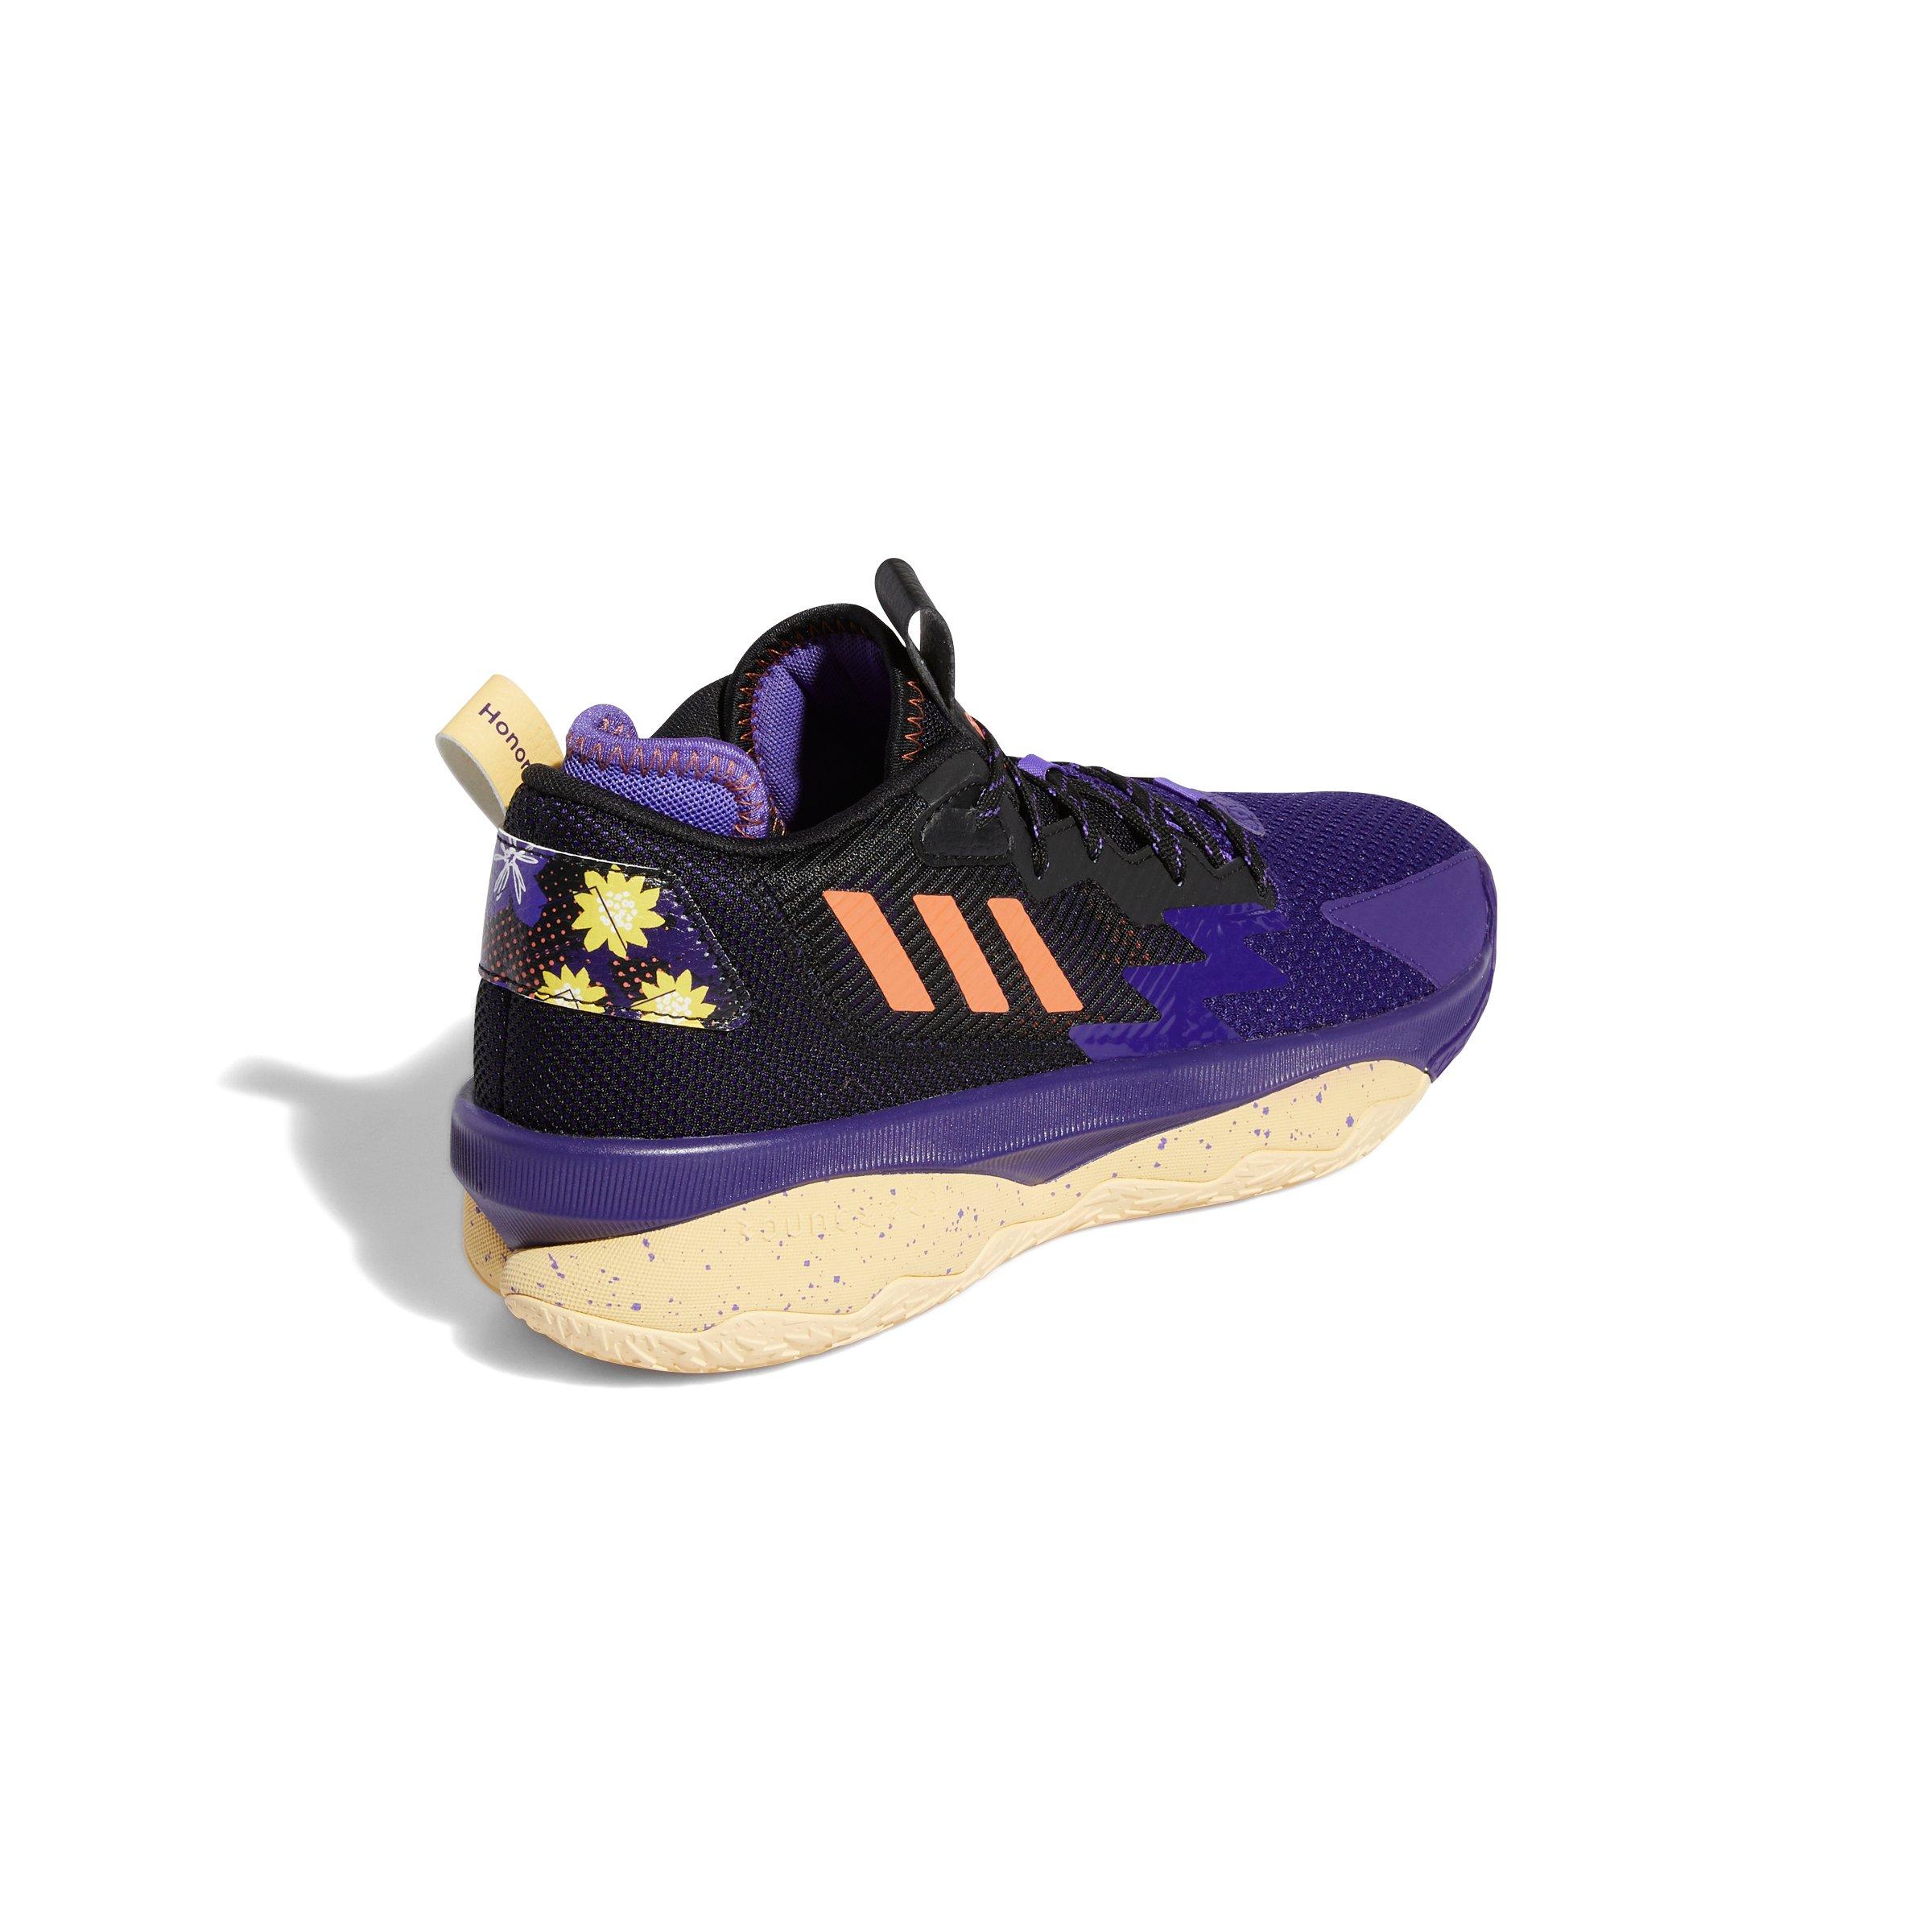 dame 8 shoes purple